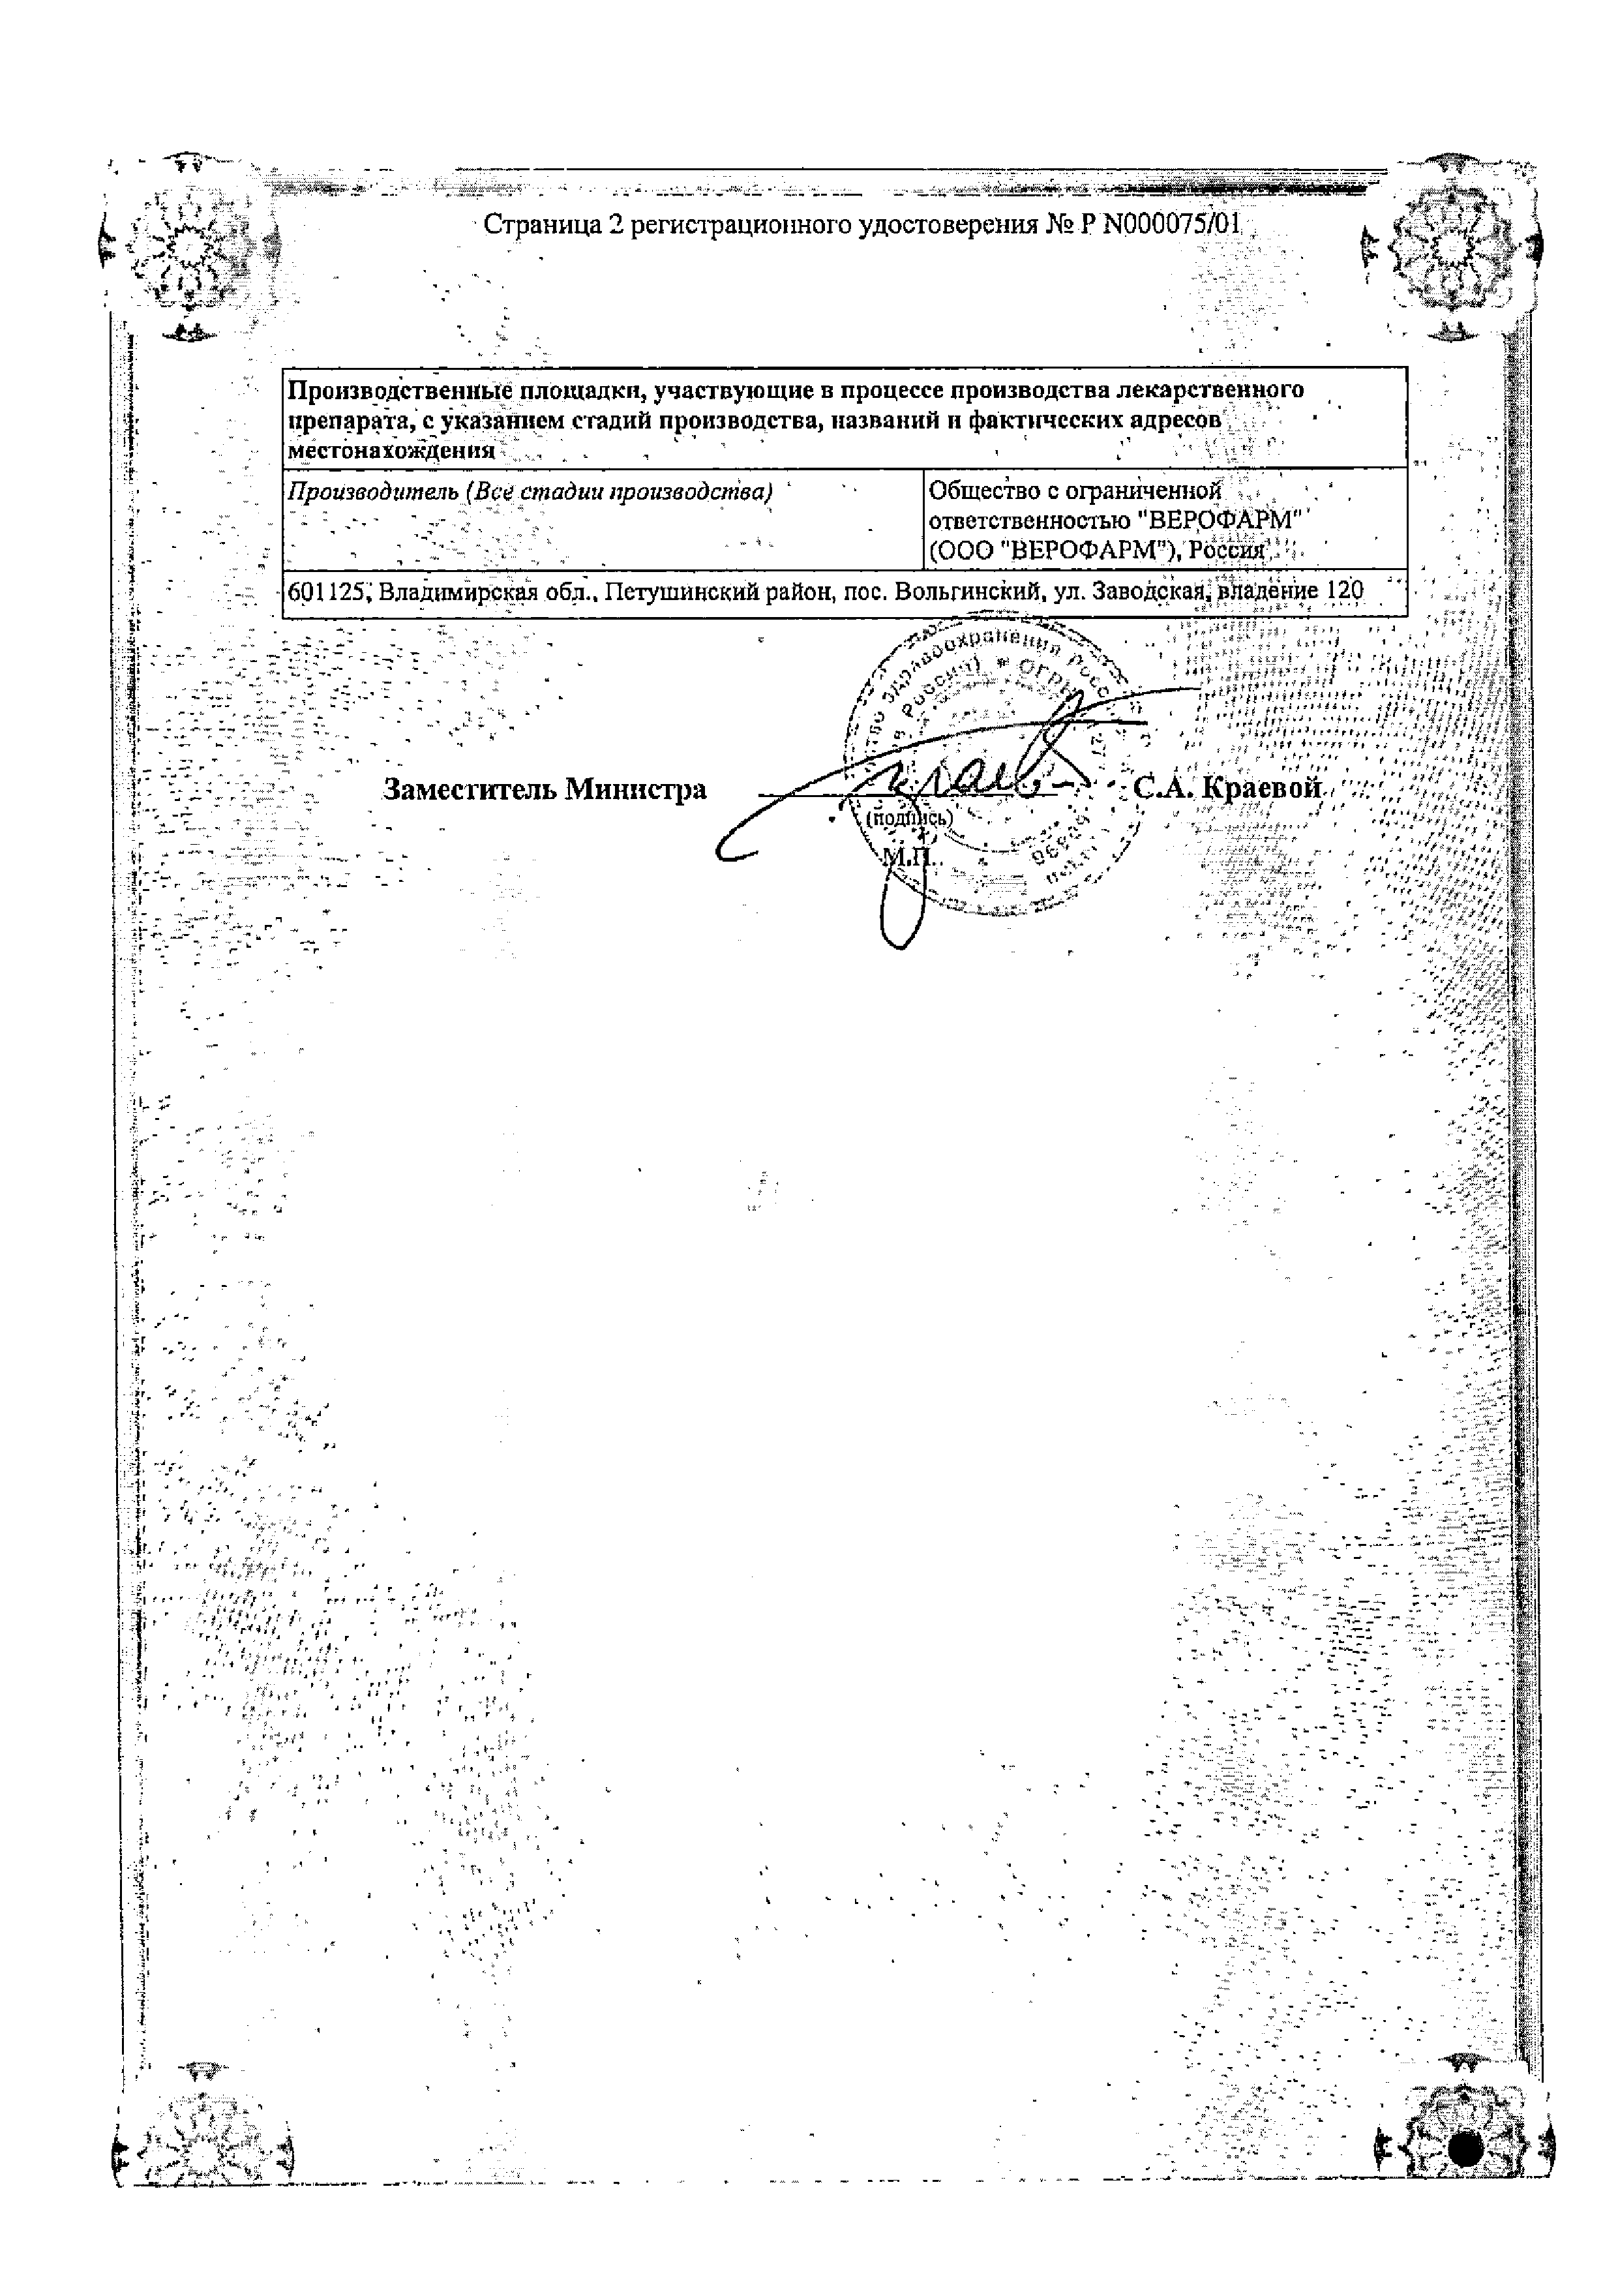 Цитарабин-ЛЭНС сертификат